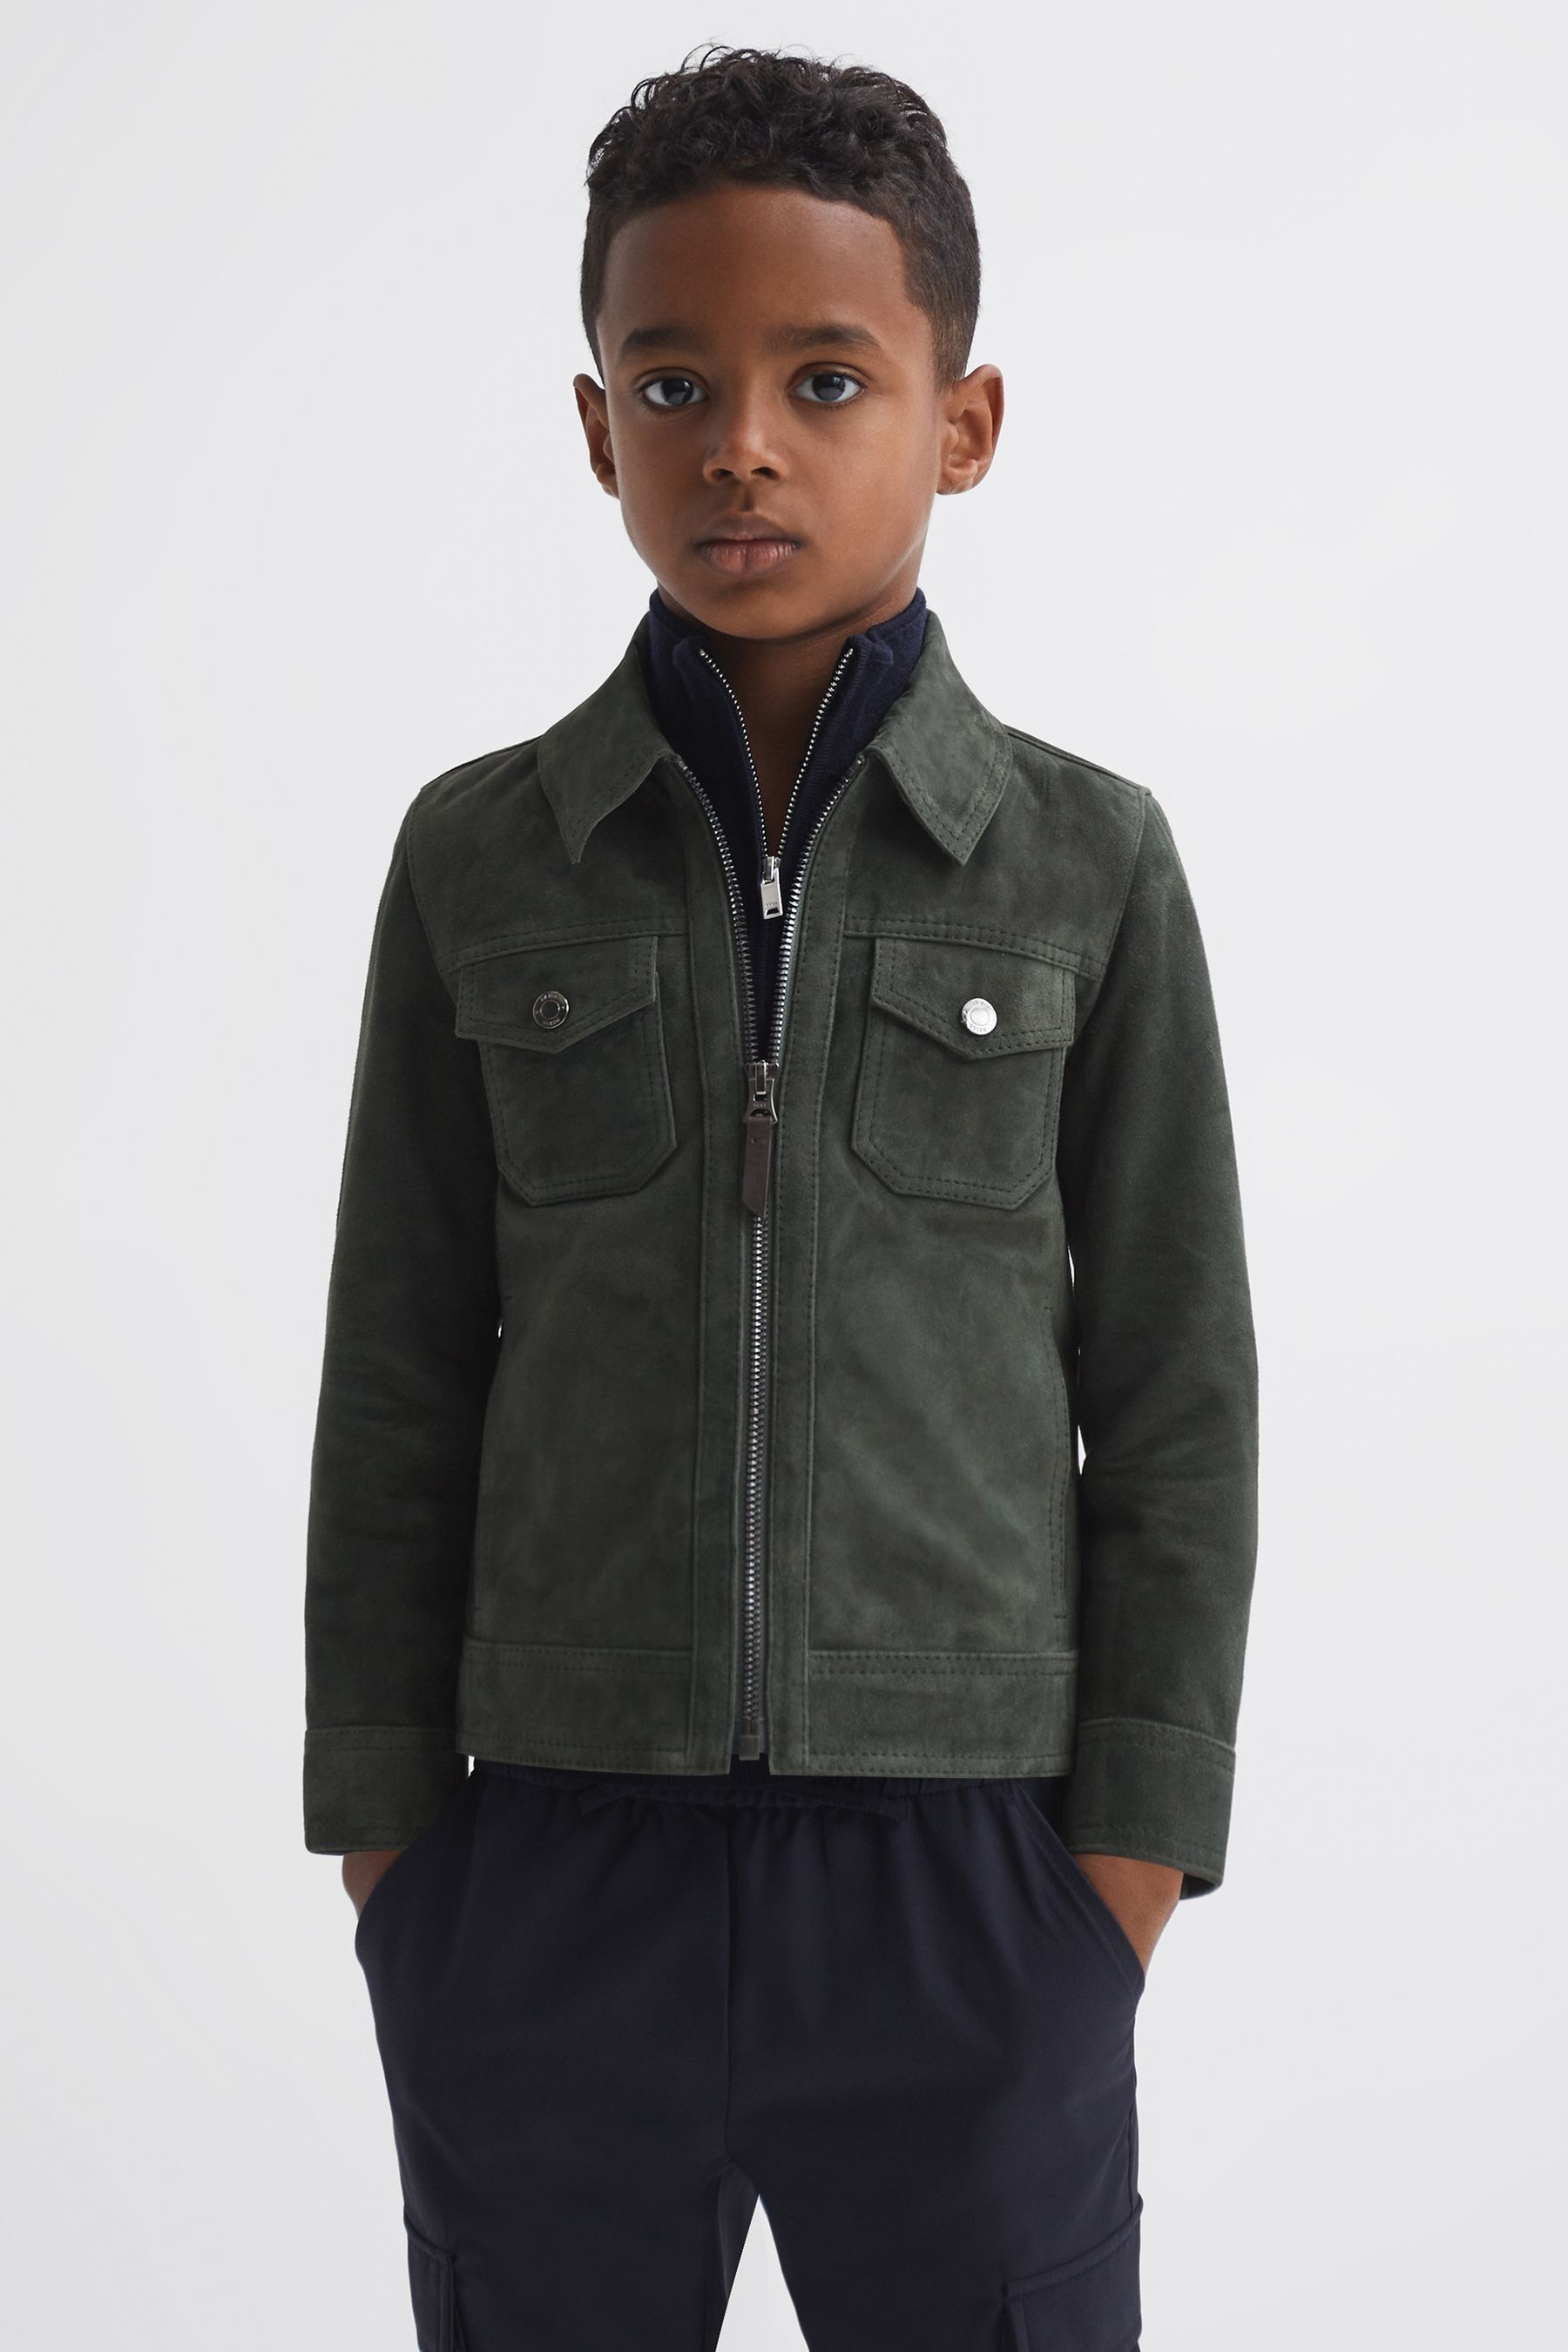 Reiss Kids' Pike - Forest Green Junior Suede Zip Through Jacket, Age 6-7 Years